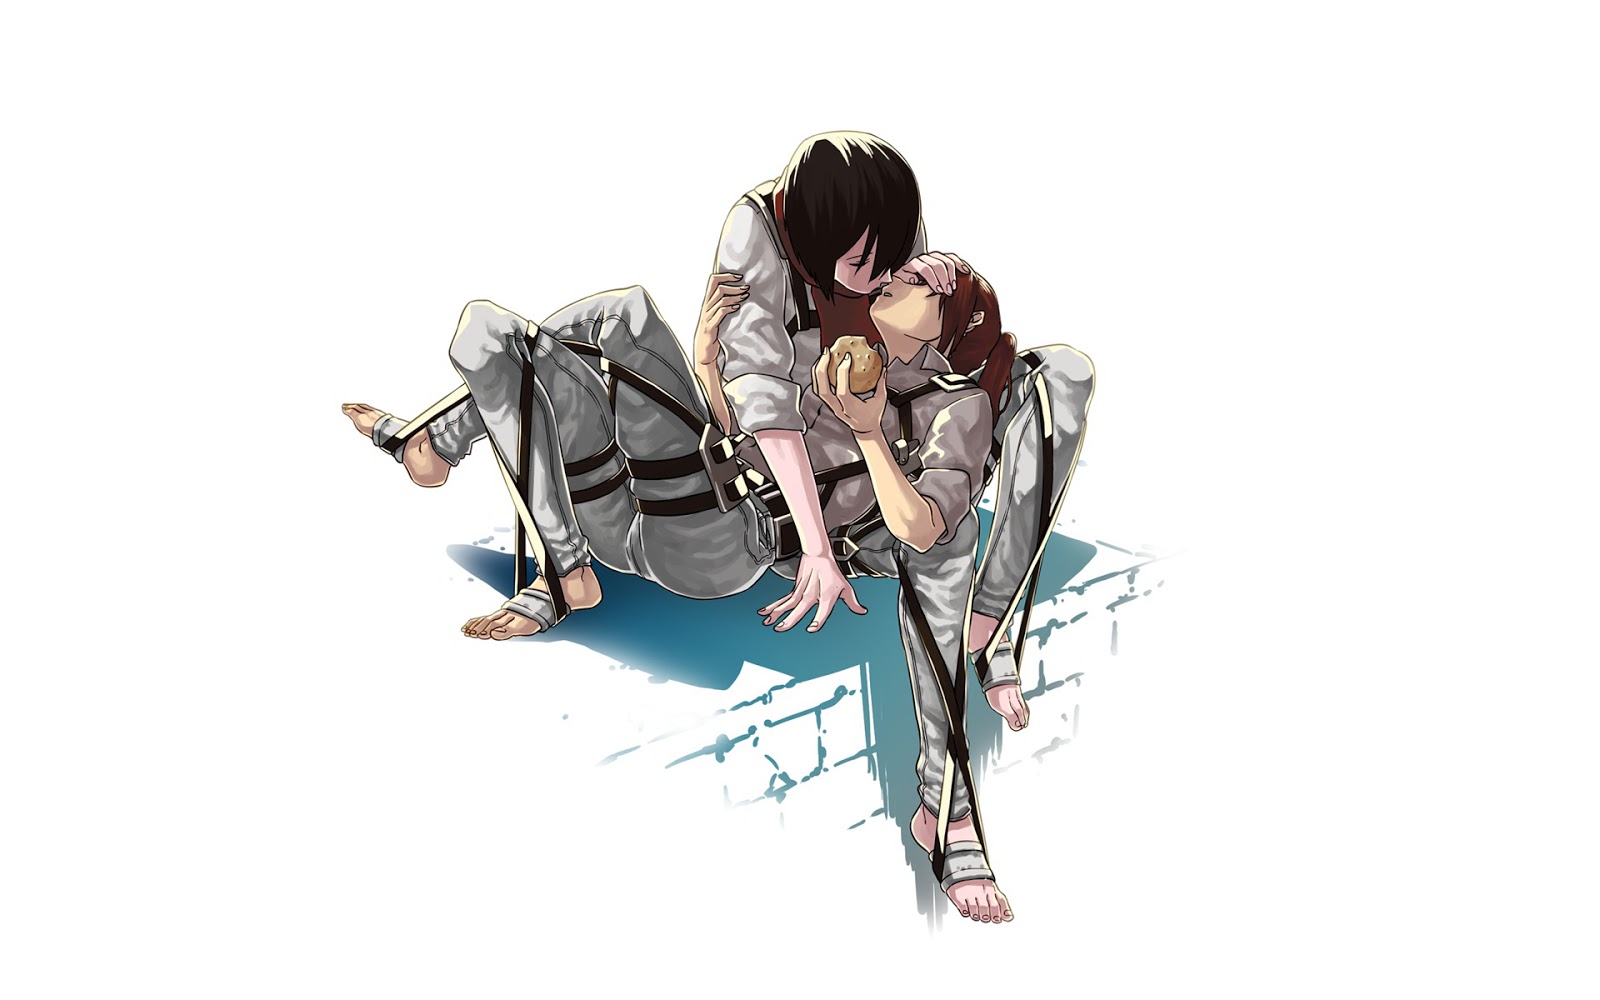 hd wallpaper: Mikasa Eren Kissing Sweet Couple 1819.